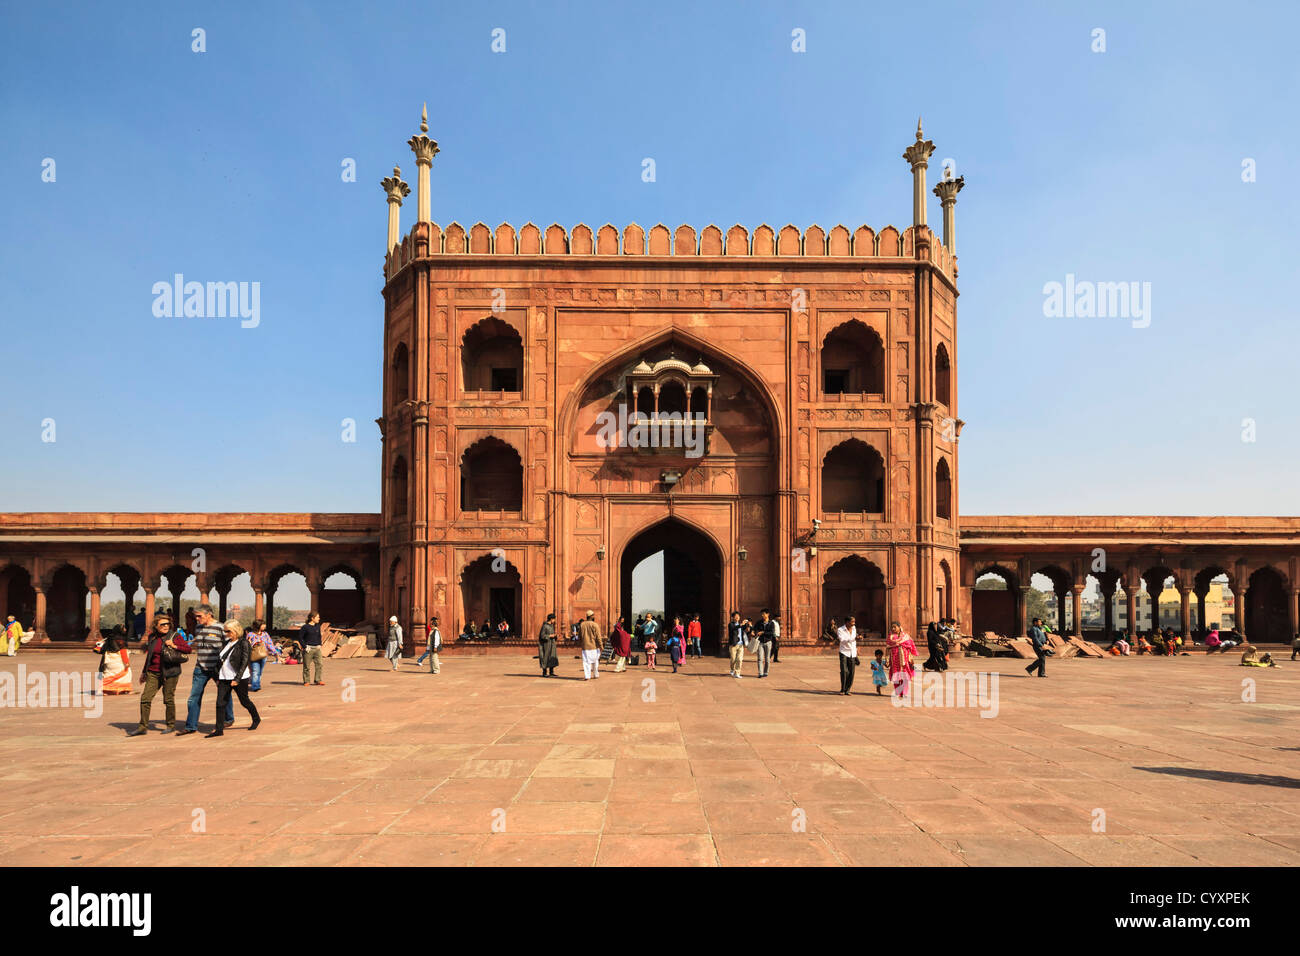 India, Old Delhi, People at Jama Masjid Mosque Stock Photo